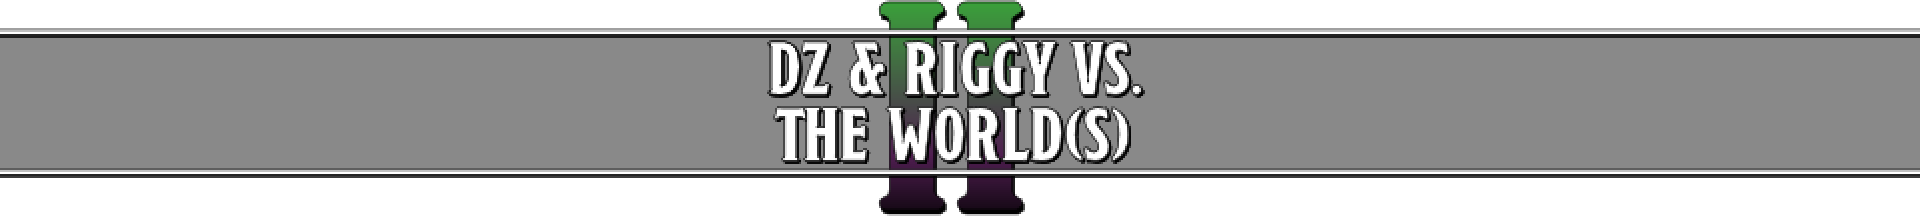 DZ & Riggy vs the World(s) II